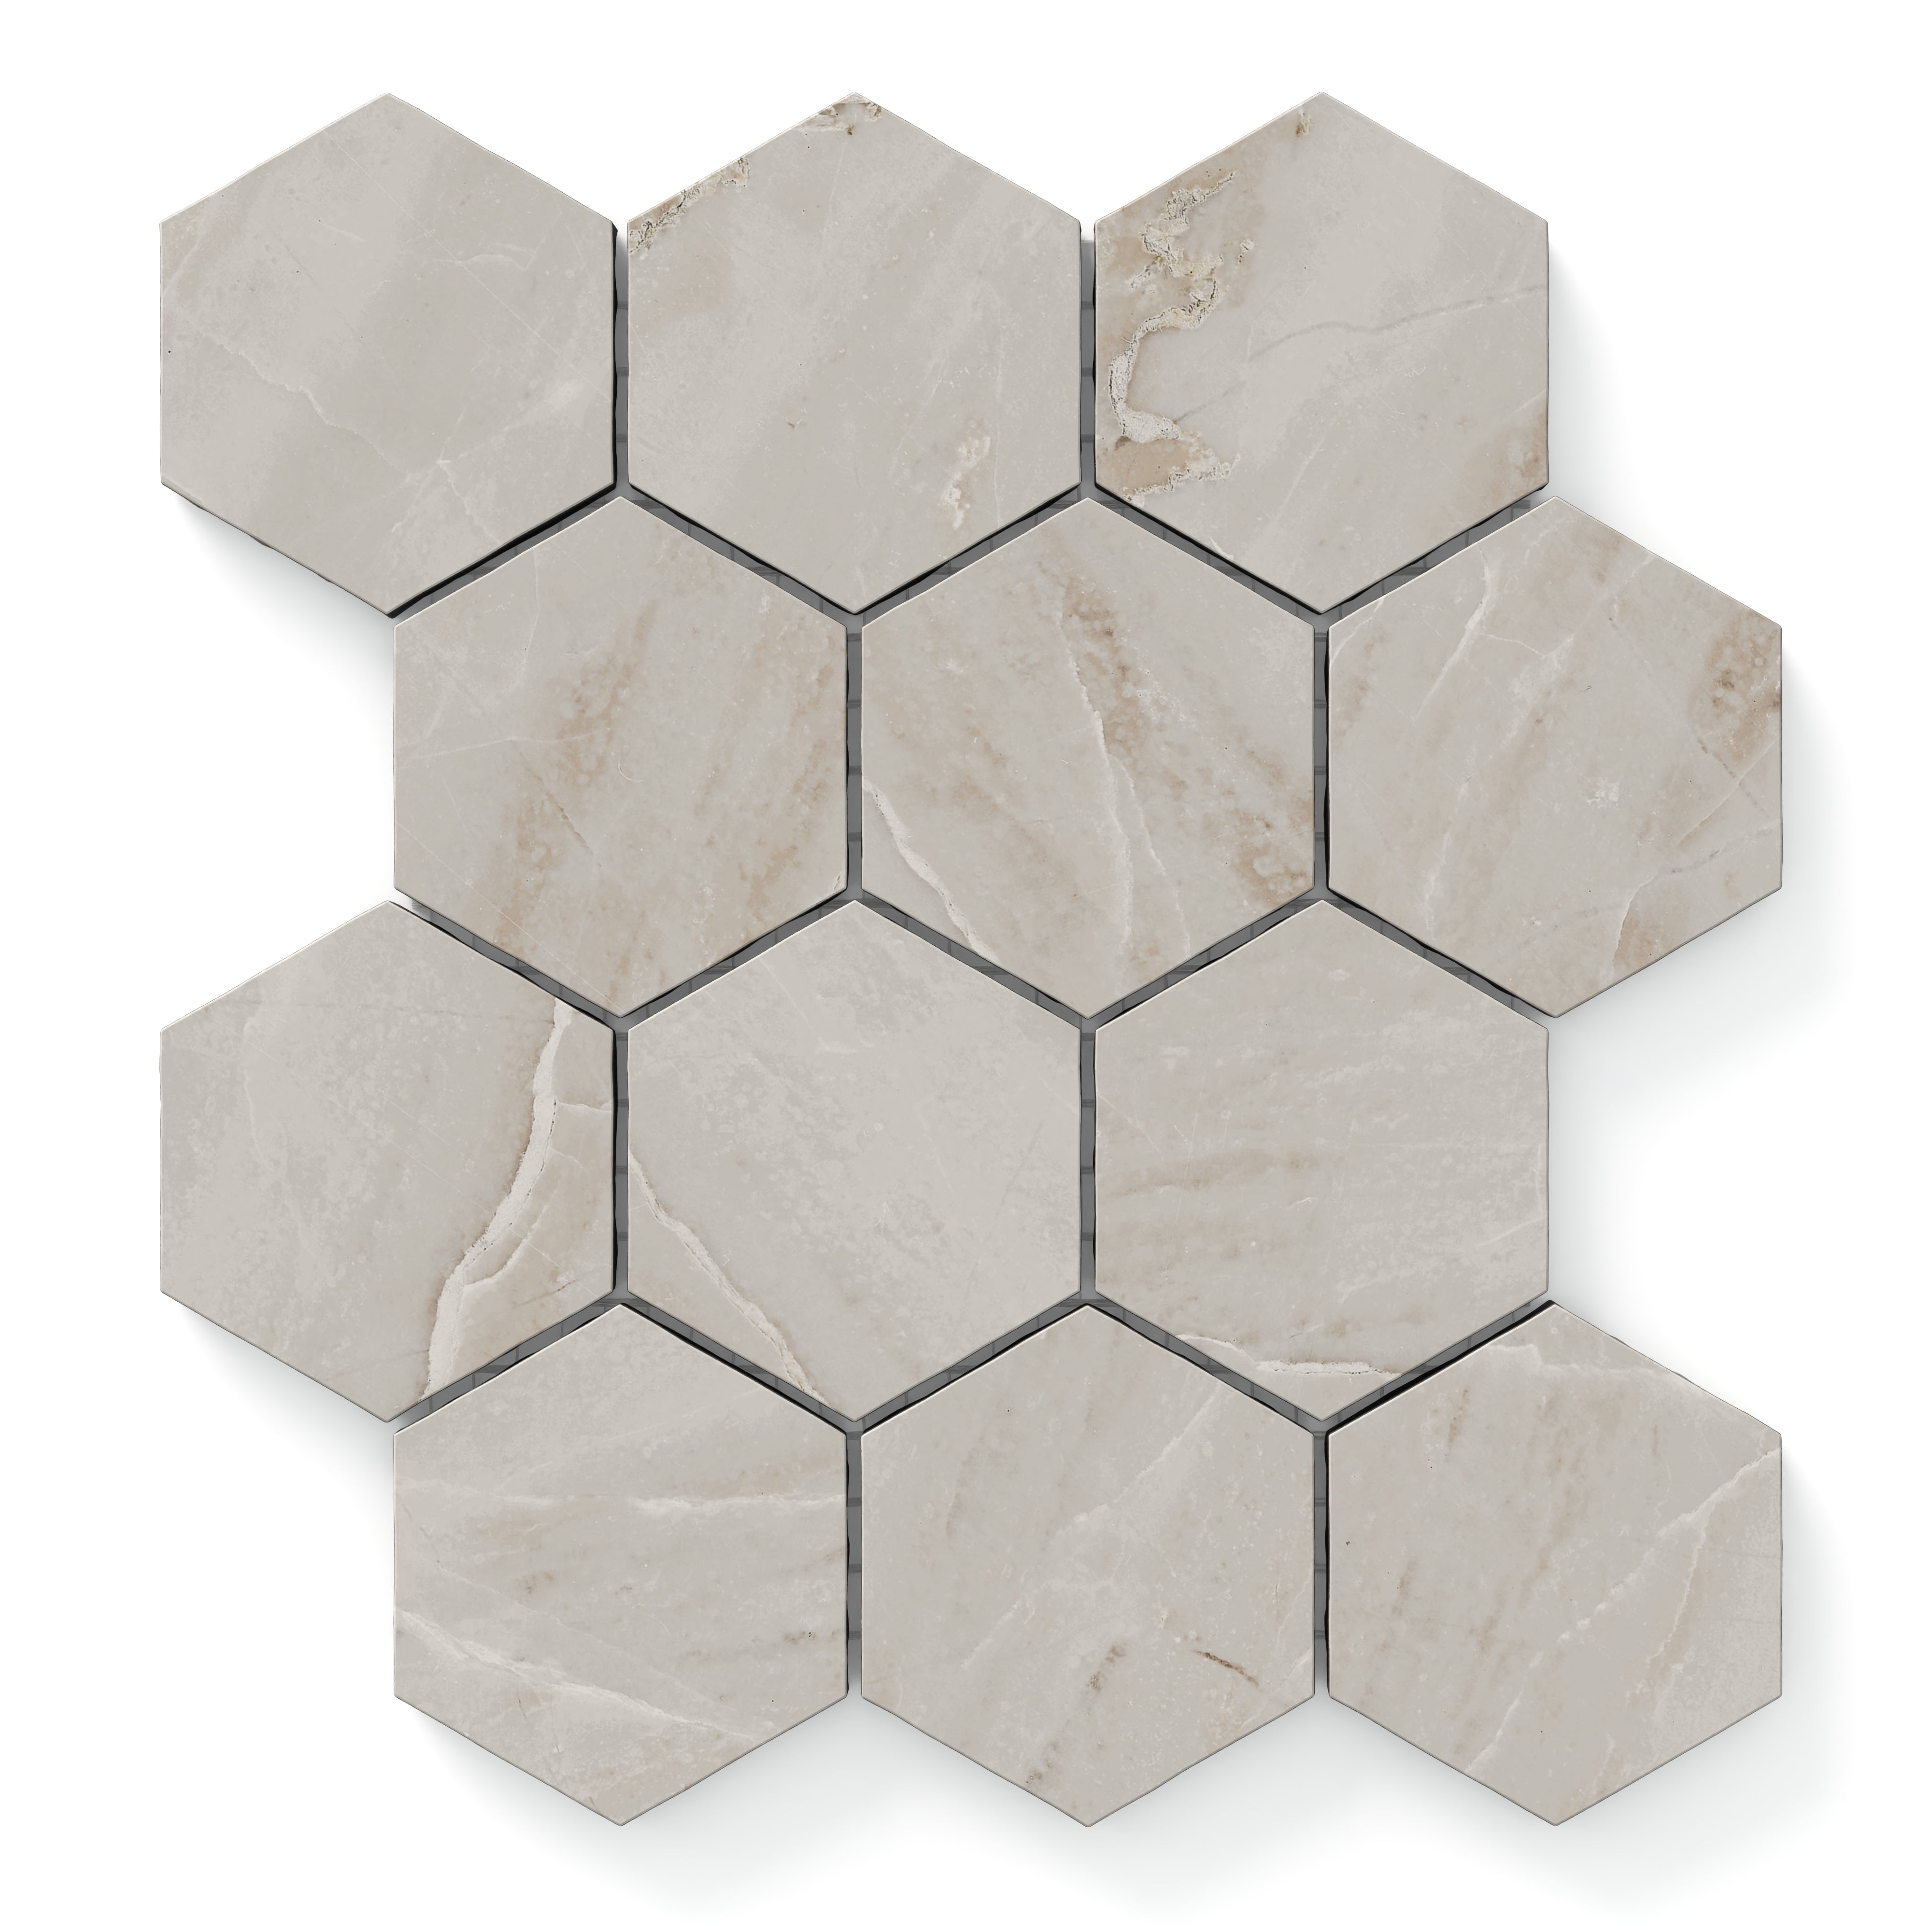 Blair 3x3 Matte Porcelain Hexagon Mosaic Tile in Oniciata Beige